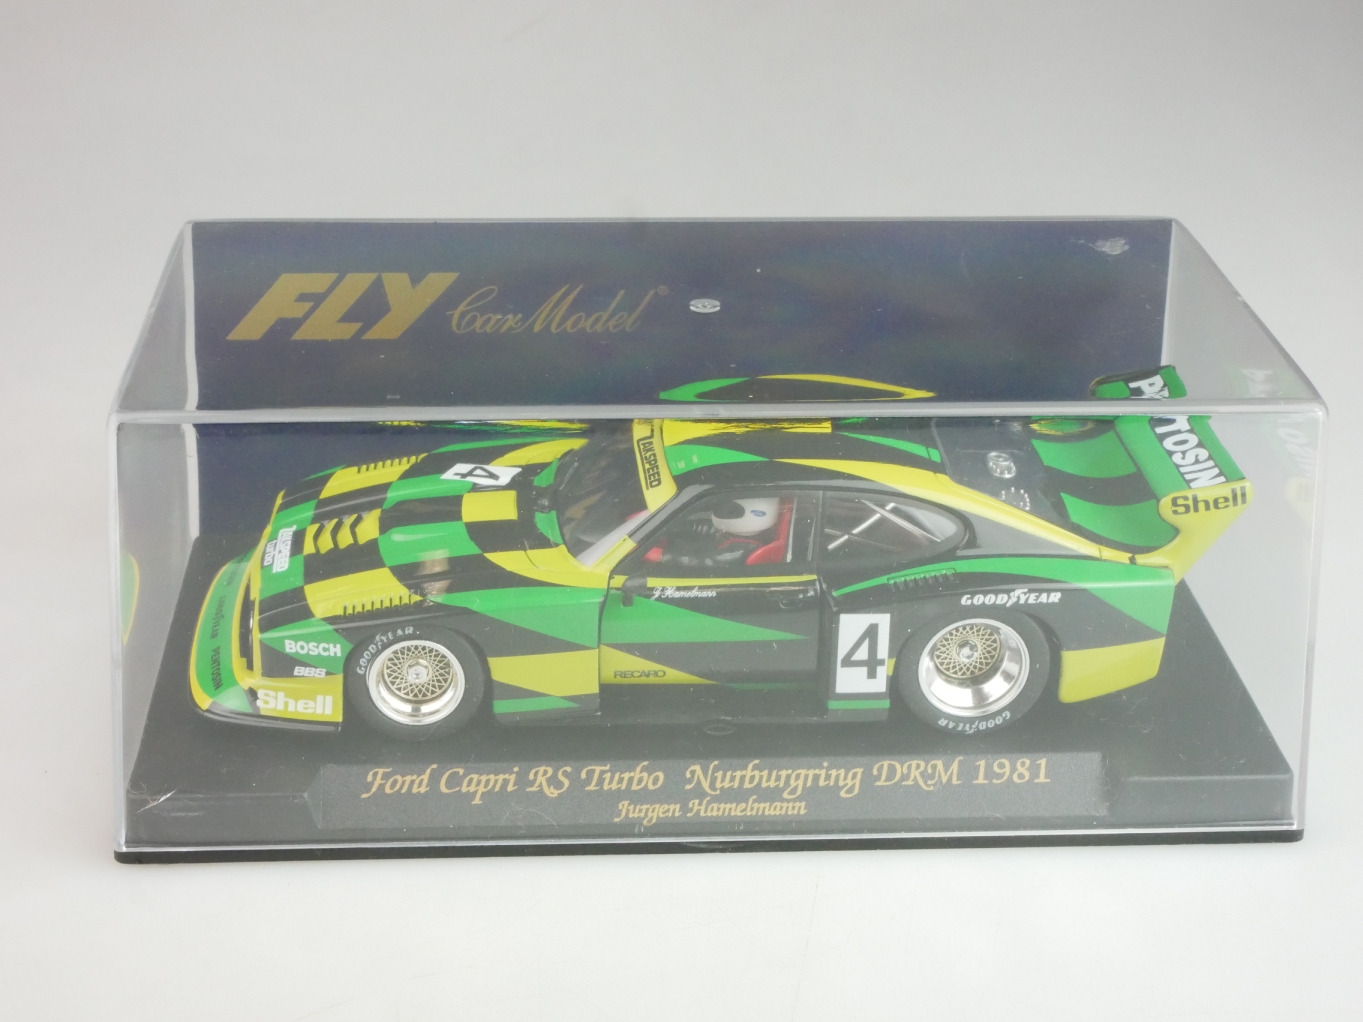 FLY Slot Car A143 1/32 Ford Capri RS Turbo Nürburgring DRM 1981 + Box - 120891